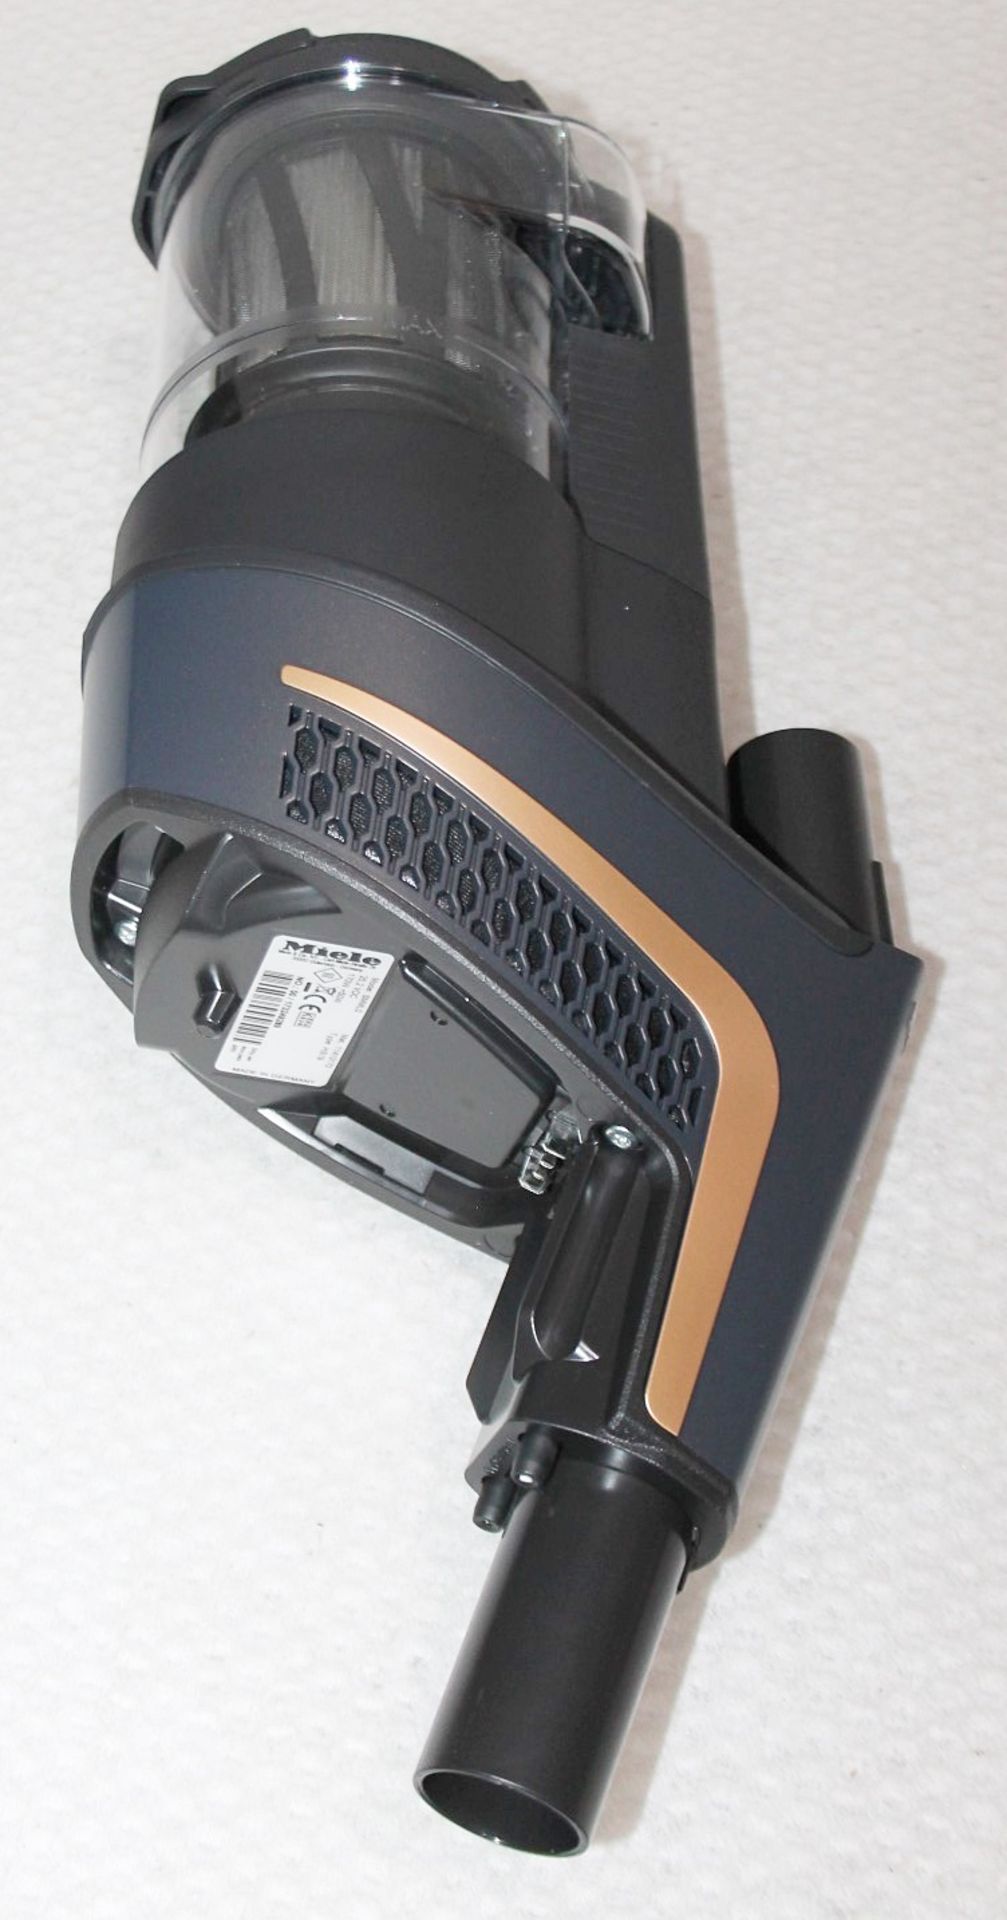 1 x MIELE Triflex HX1 Pro Cordless Vacuum Cleaner - Original Price £580.00 - Boxed Stock - Image 11 of 28